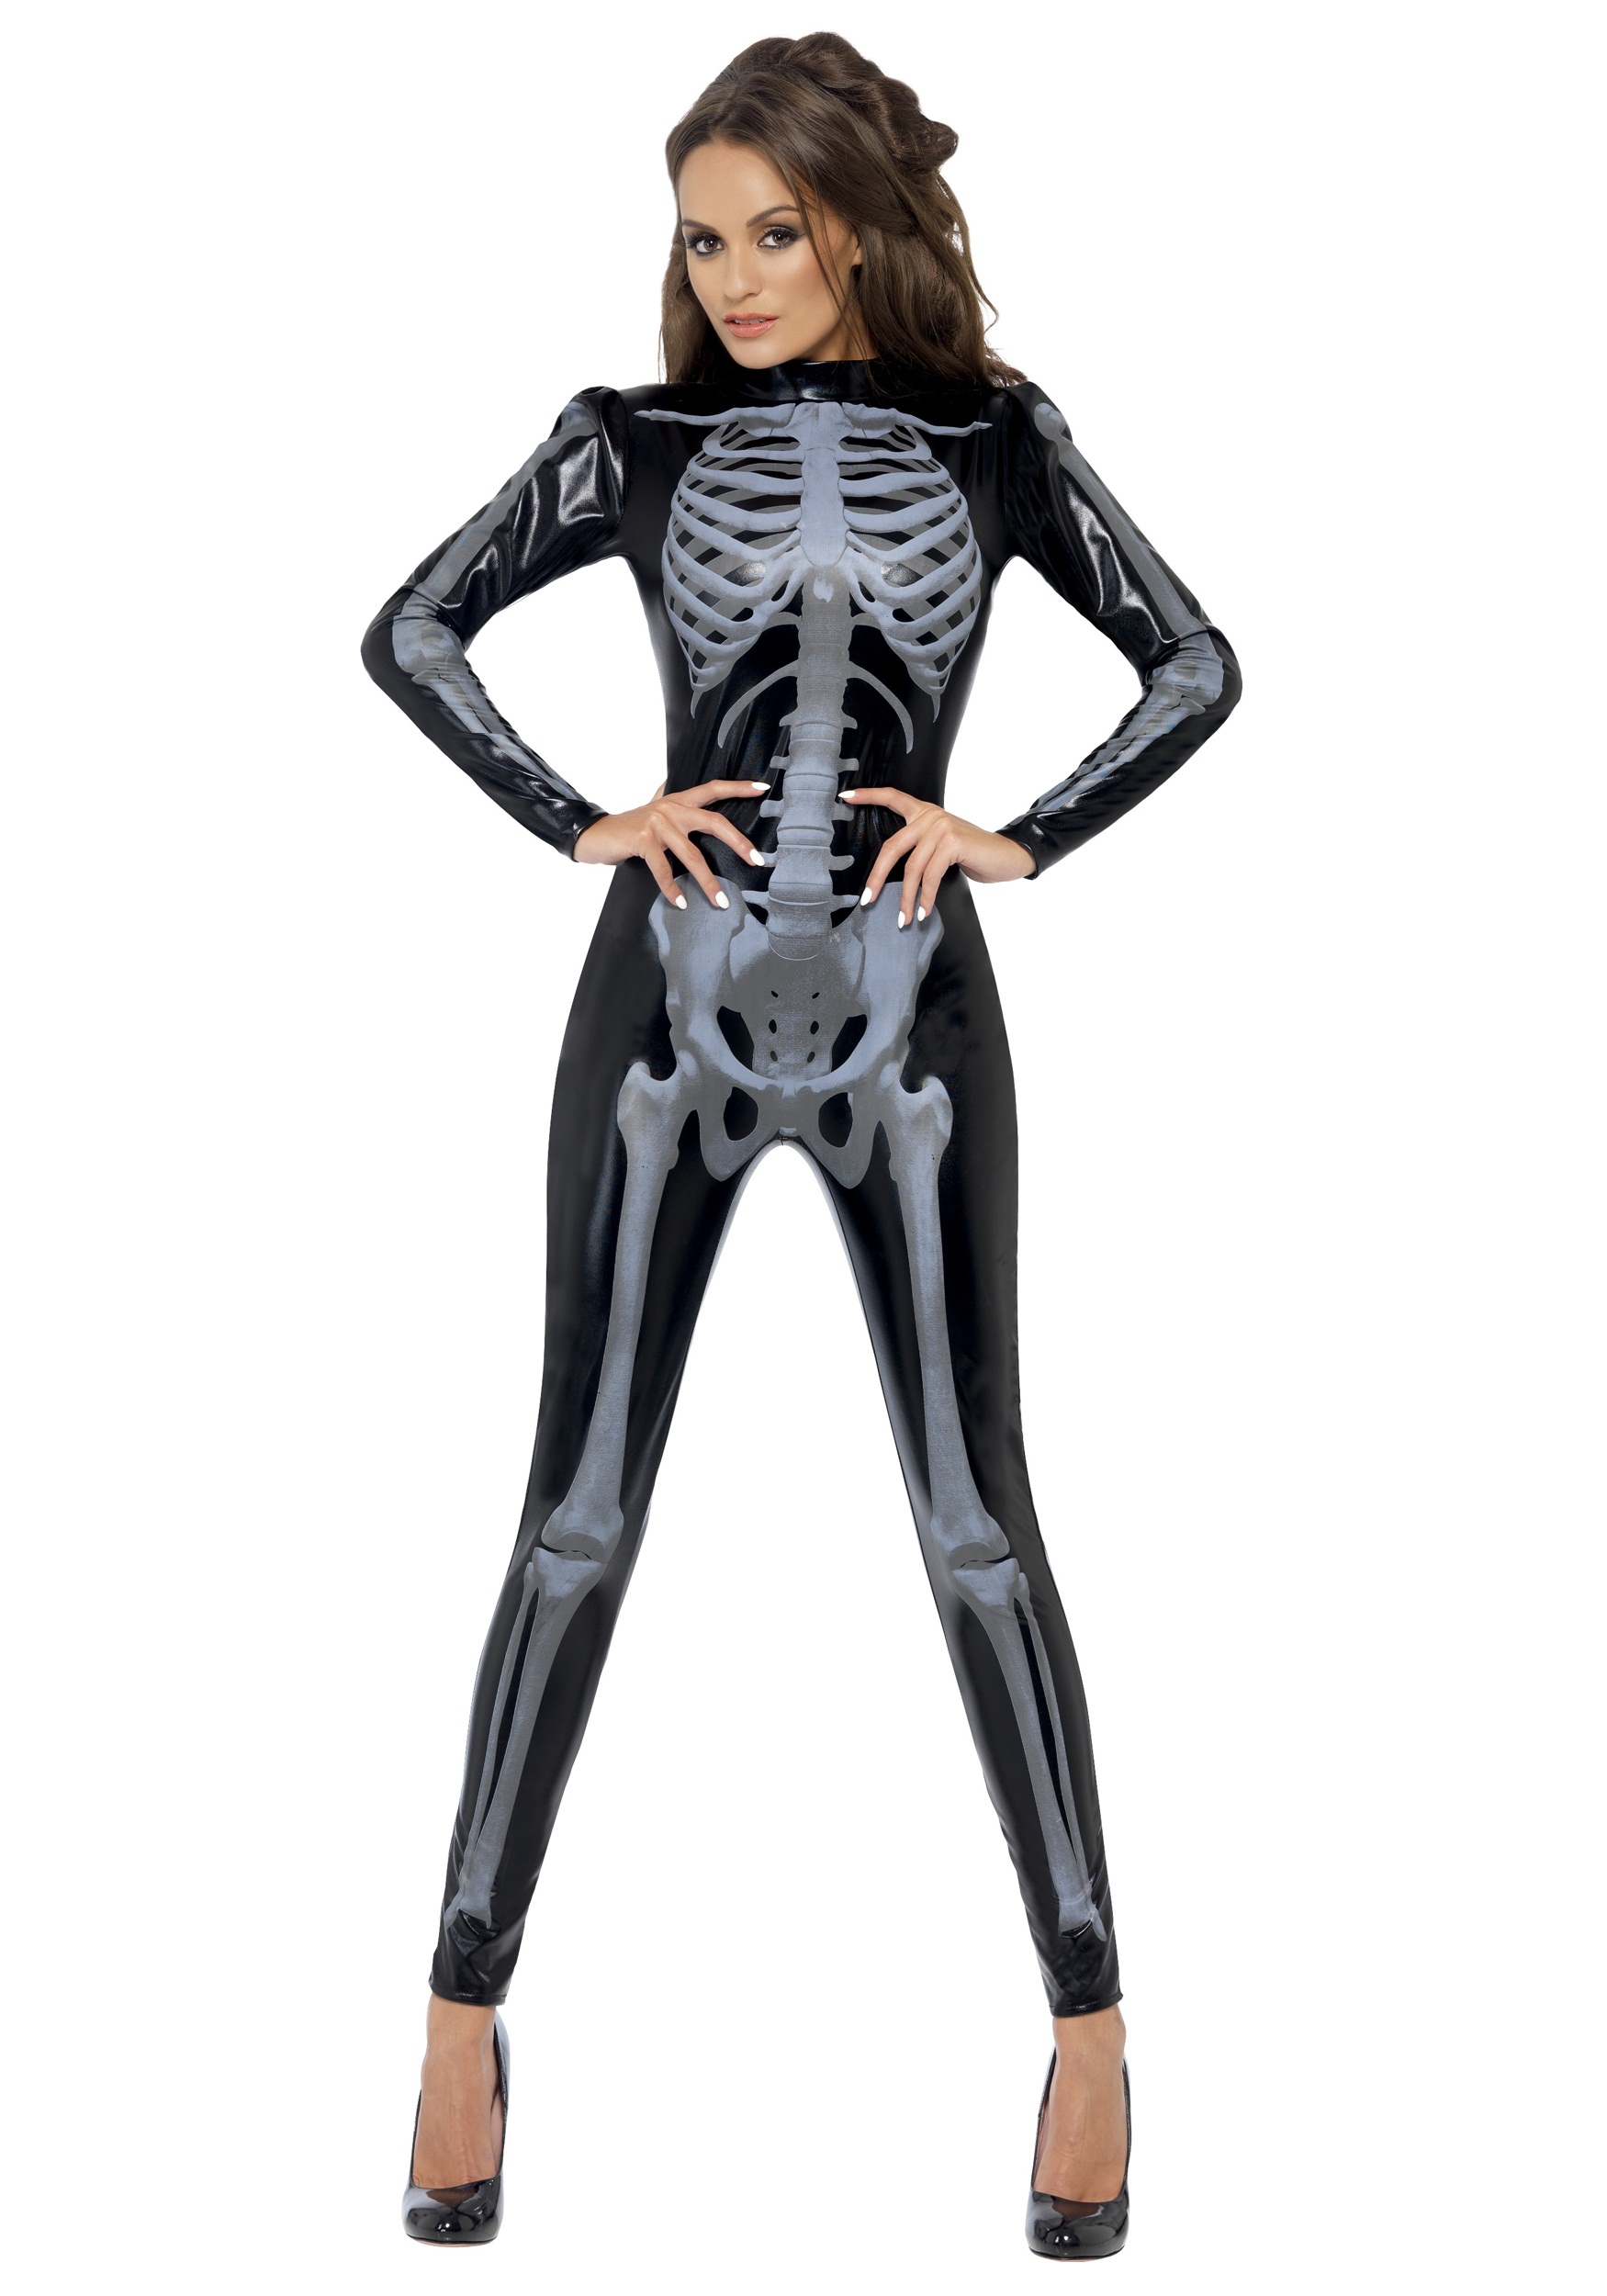 Photos - Fancy Dress X-Ray Smiffys Women's  Skeleton Jumpsuit Costume Black/White SM43838 